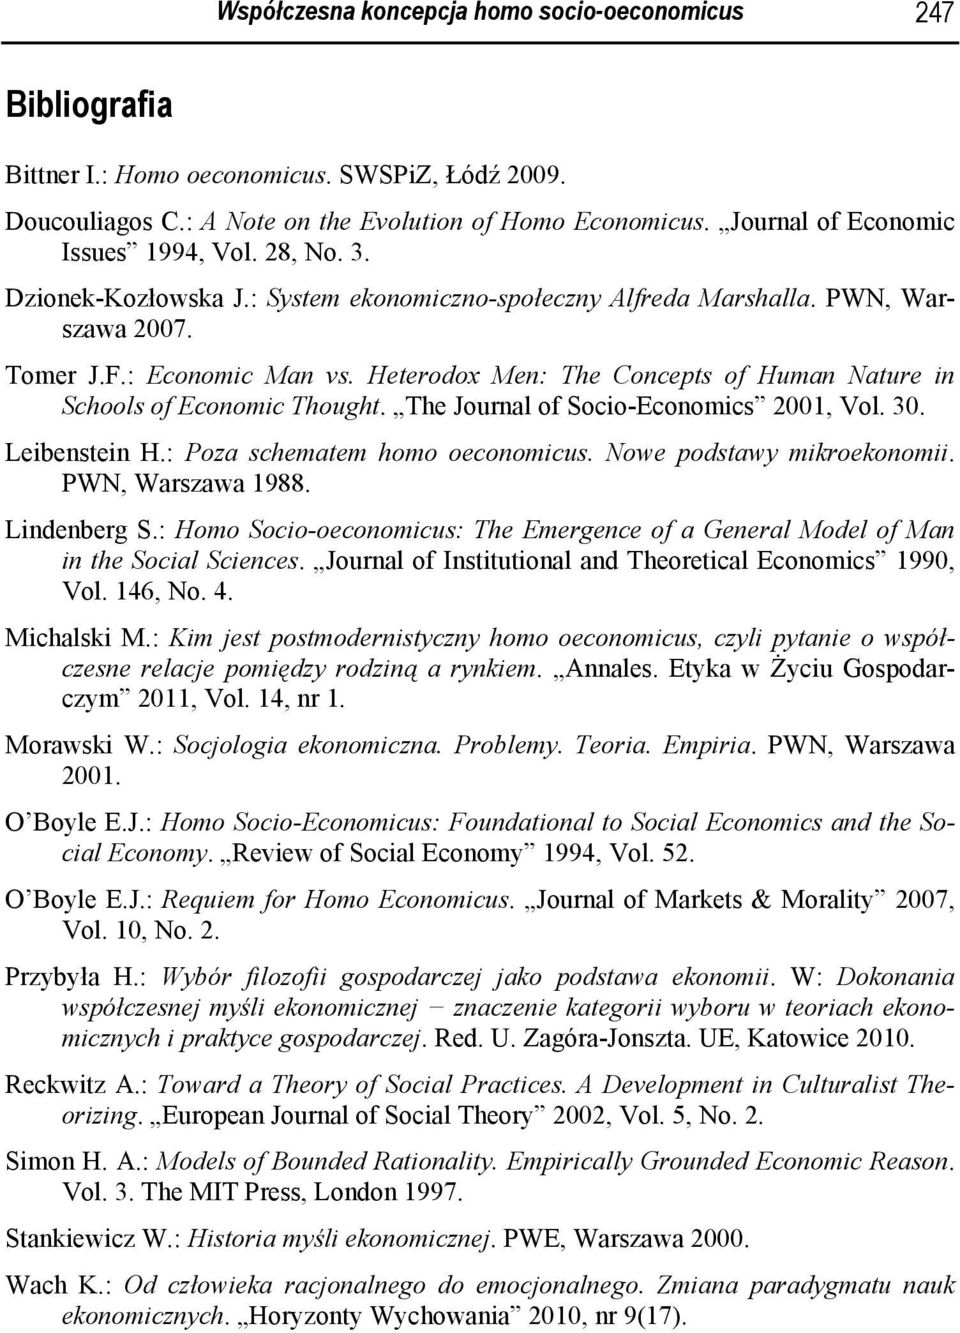 Heterodox Men: The Concepts of Human Nature in Schools of Economic Thought. The Journal of Socio-Economics 2001, Vol. 30. Leibenstein H.: Poza schematem homo oeconomicus. Nowe podstawy mikroekonomii.